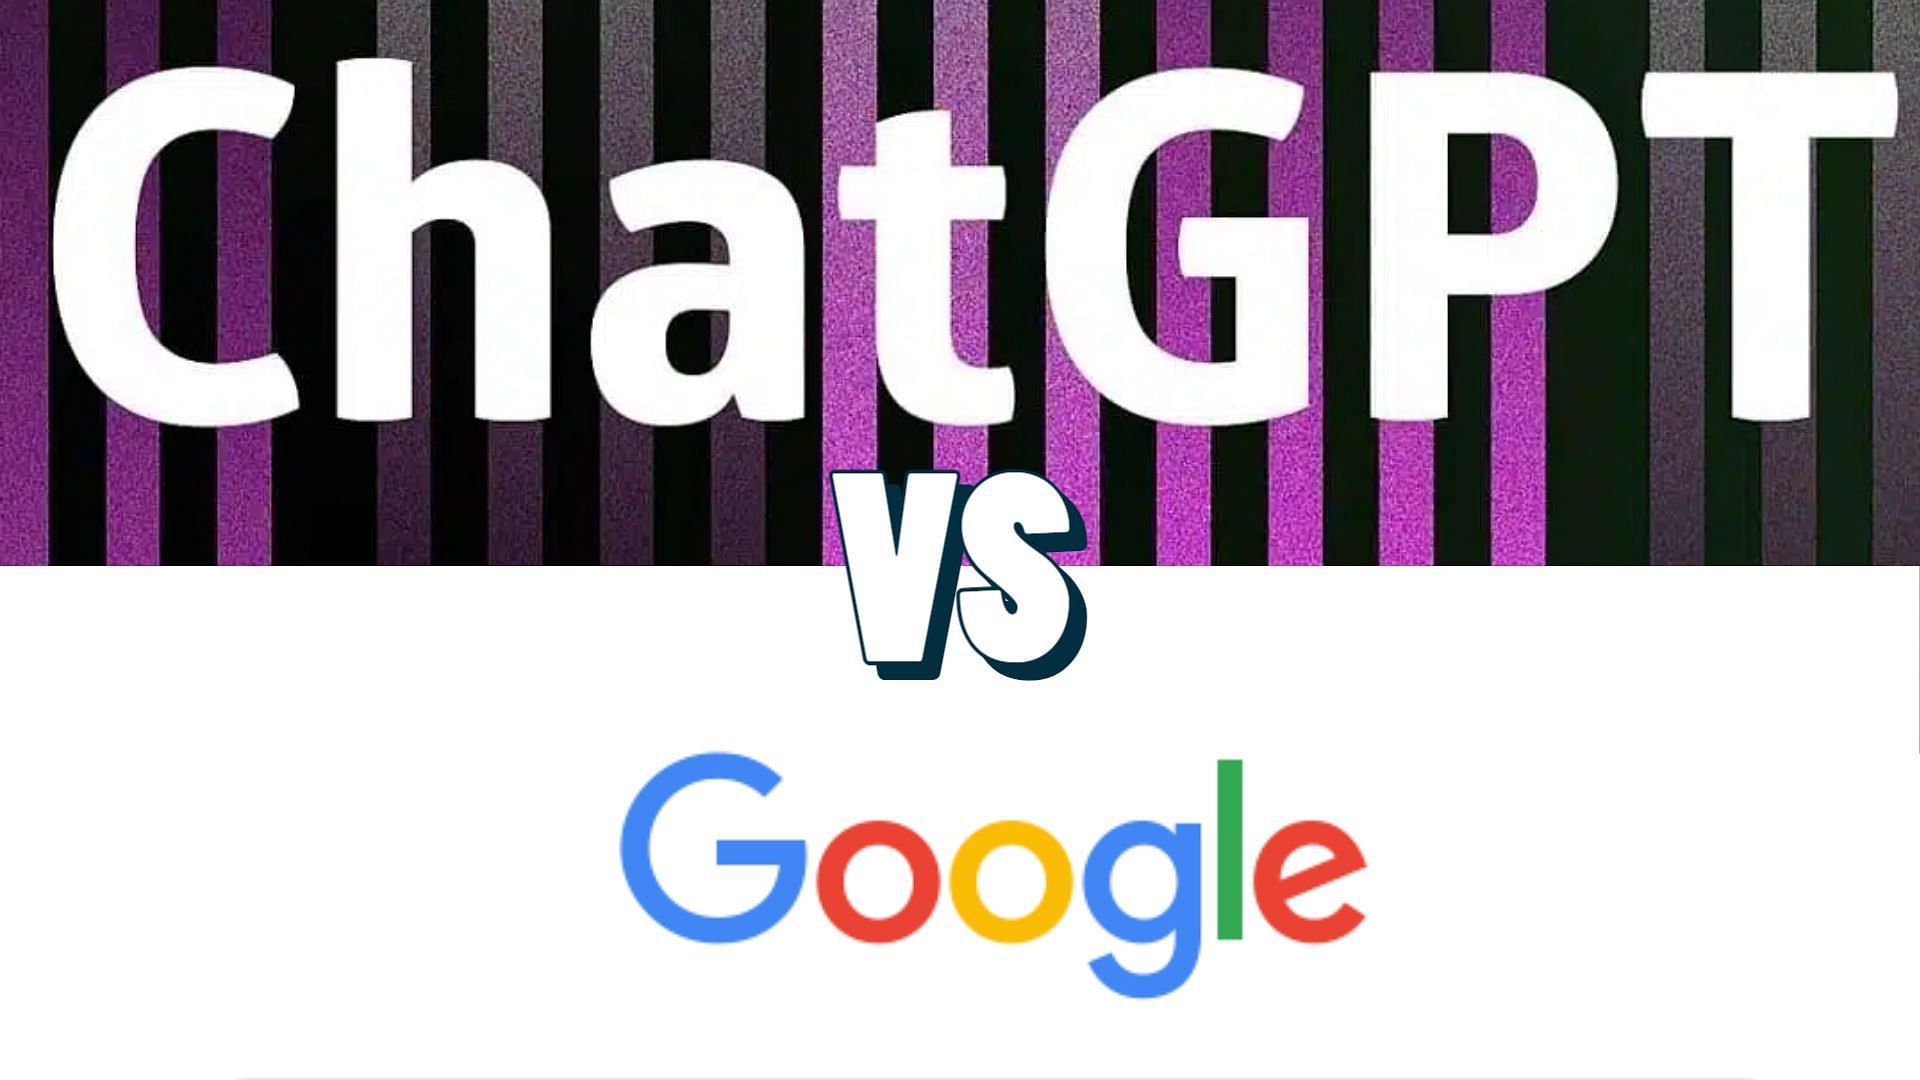 chatgpt vs google